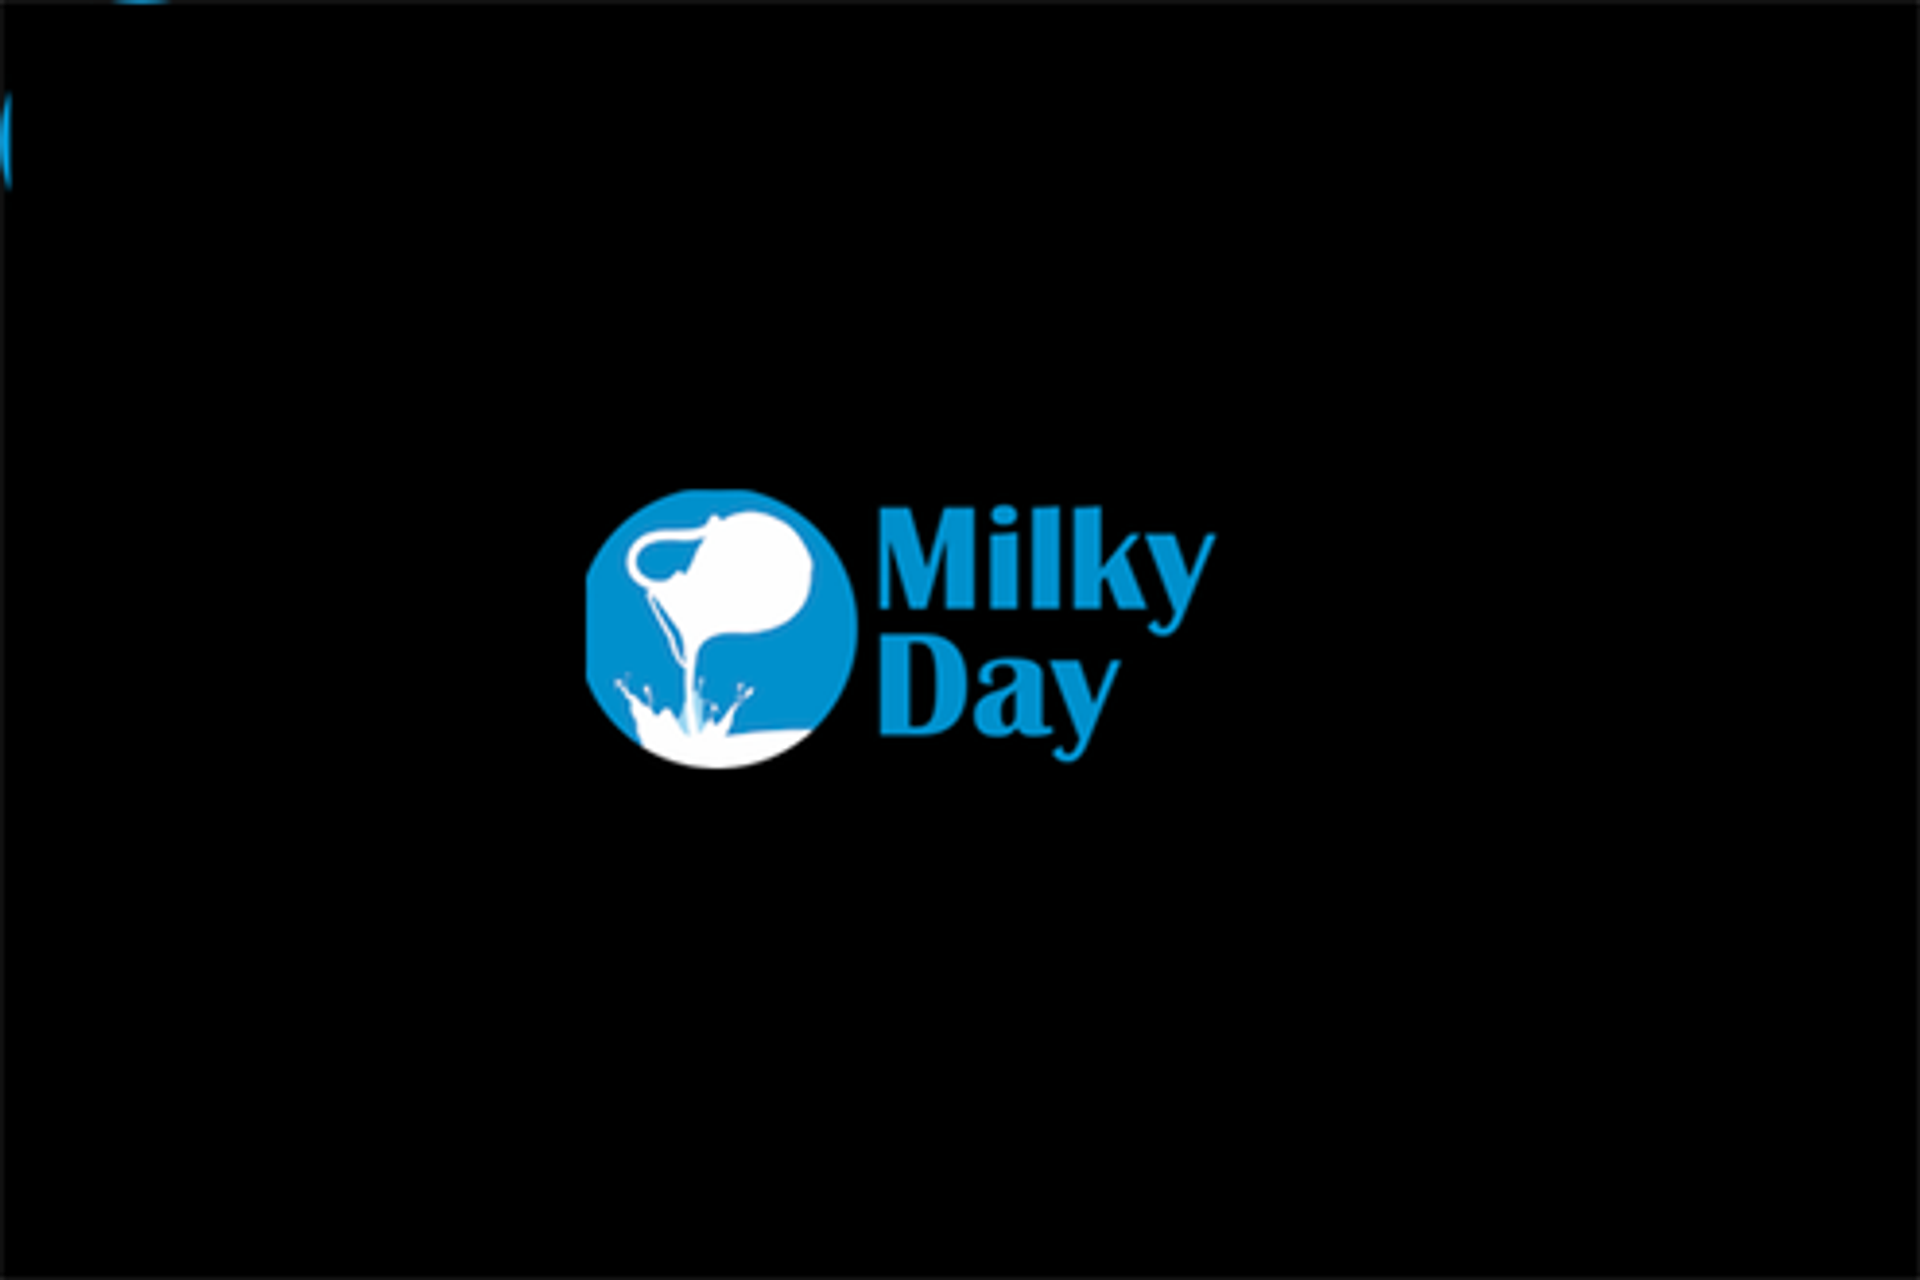 Milkyday